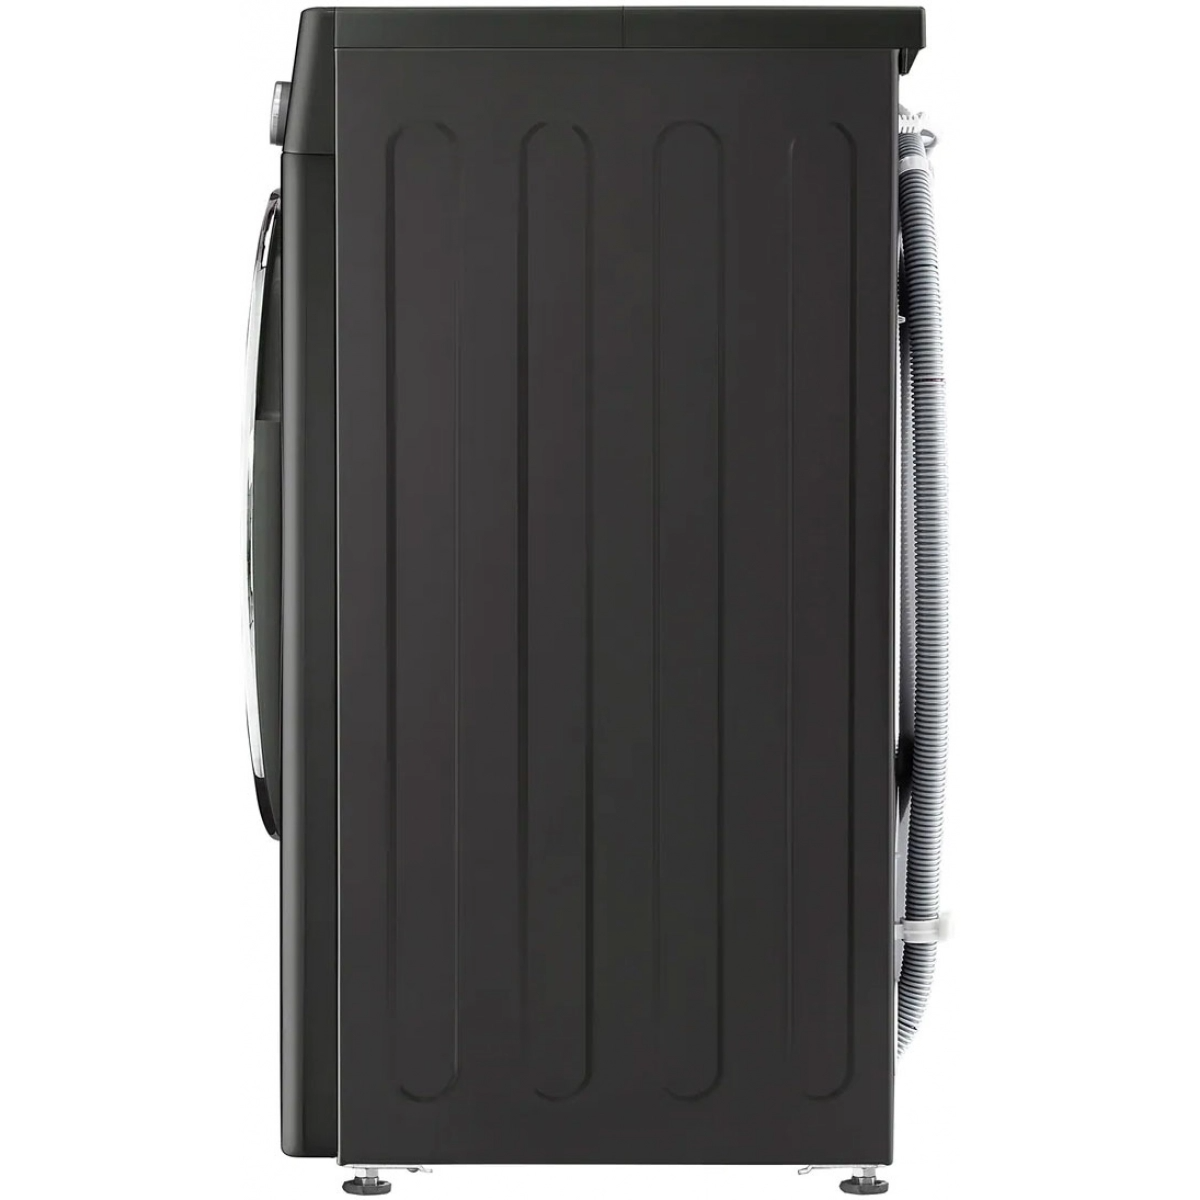 LG F-C12085V2B Washer Dryer 人工智能洗衣乾衣機 8.5/5.0kg 1200rpm